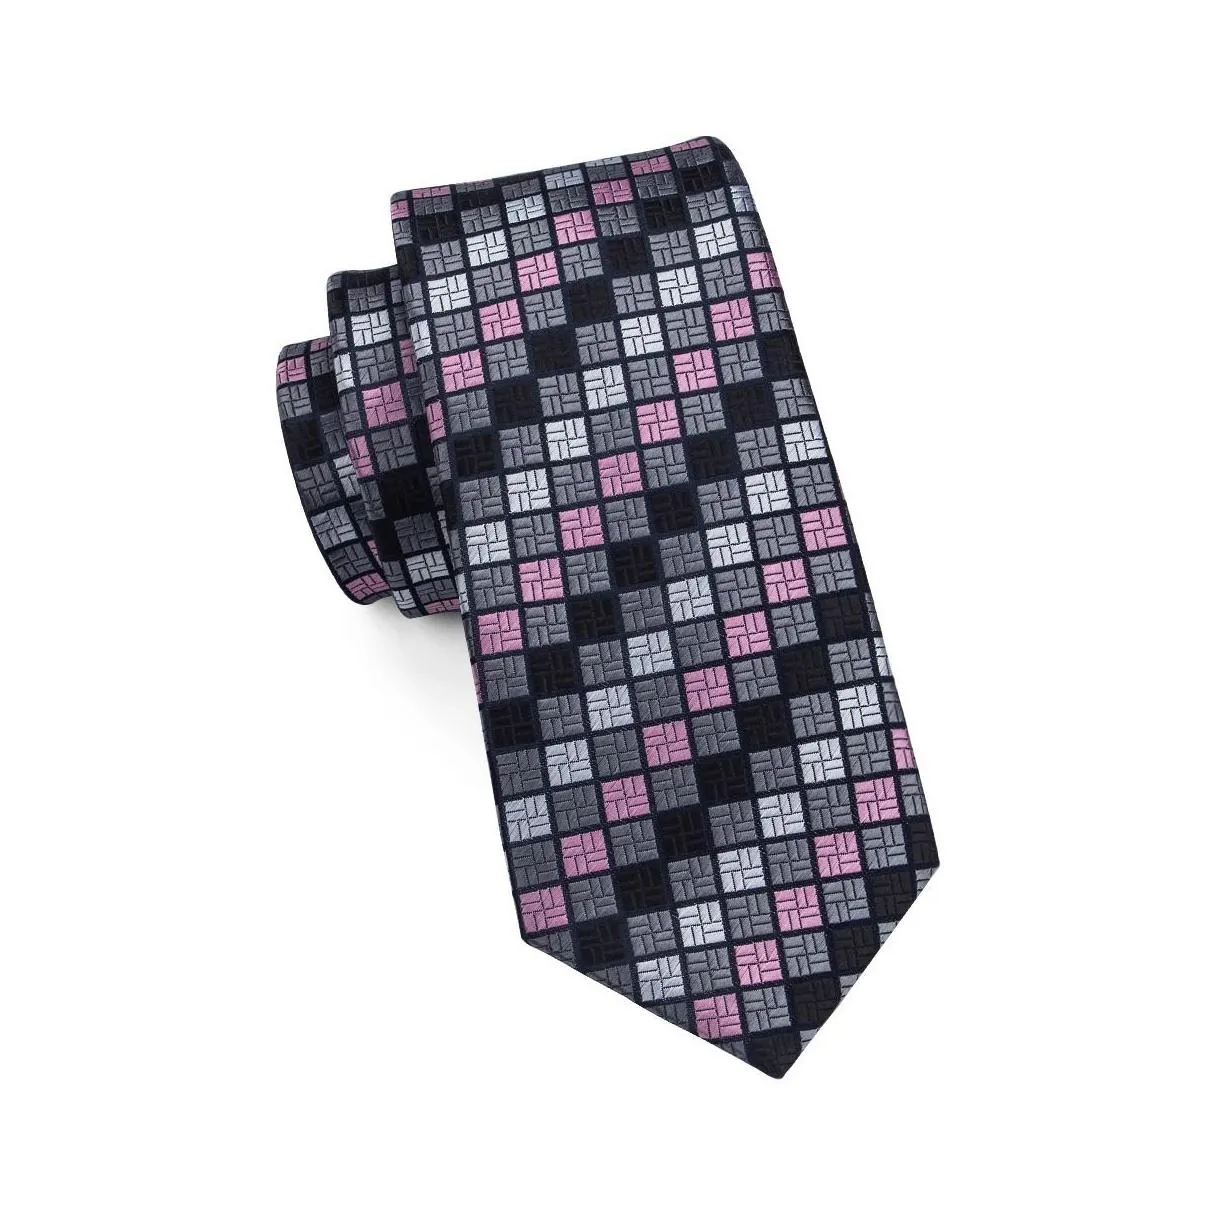 Neck Ties Neck Ties Hitie Designer Grey Plaid Novelty Silk Wedding Tie For Men Handky Cufflink Gift Mens Necktie Fashion Business Part Dhh7L